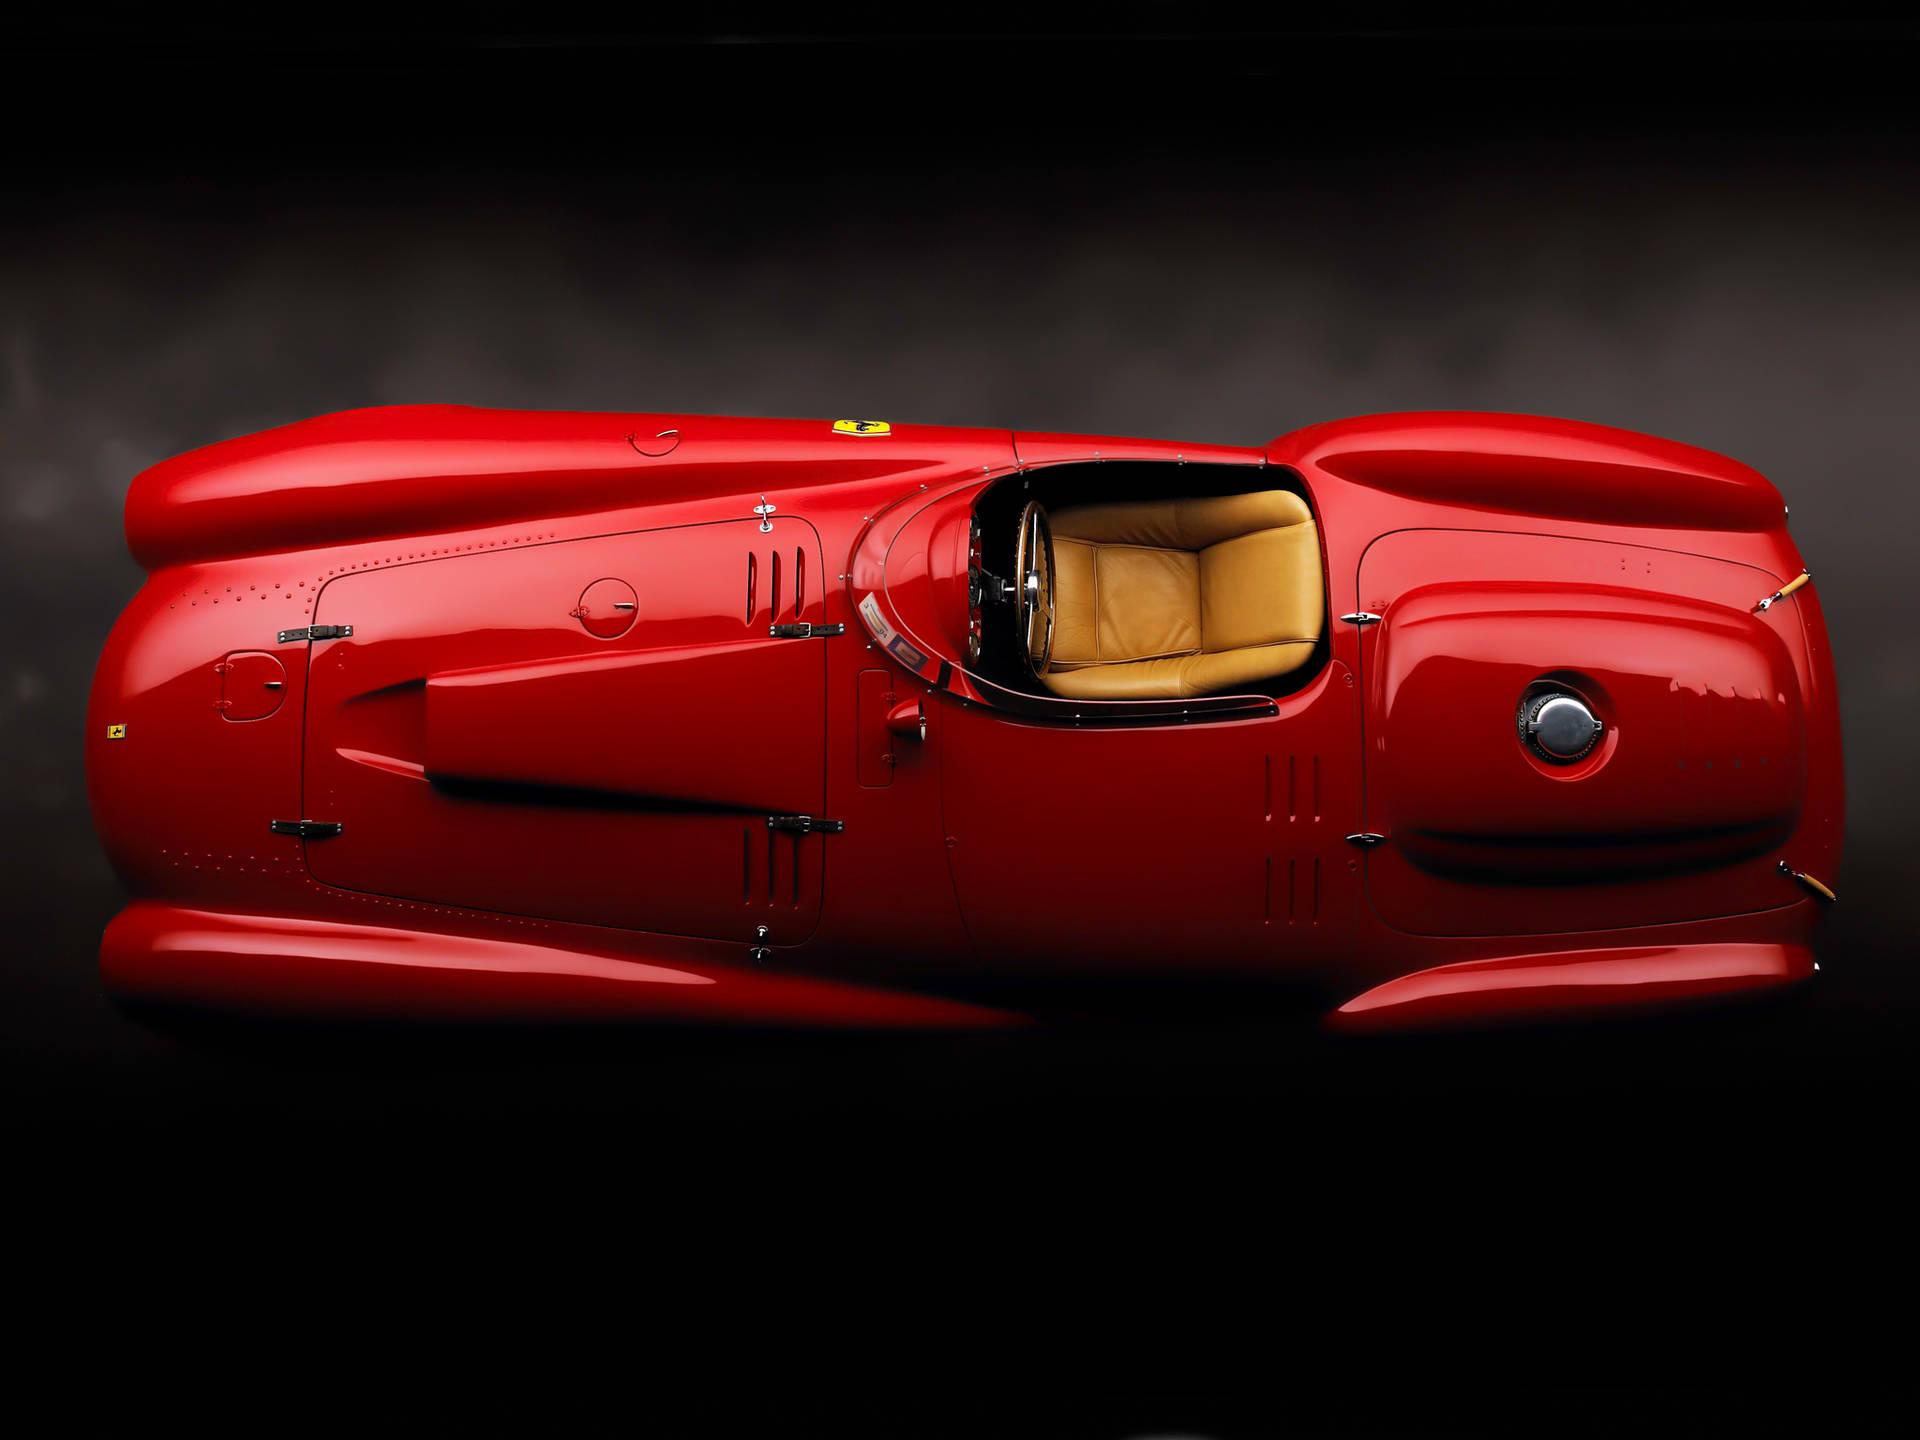 4k Ferrari 375 F1 Sportsvog Maleri: Udtryk din personlige stil med detaljerne i et 4k maleri af et Ferrari 375 F1 Sportsvogn. Wallpaper